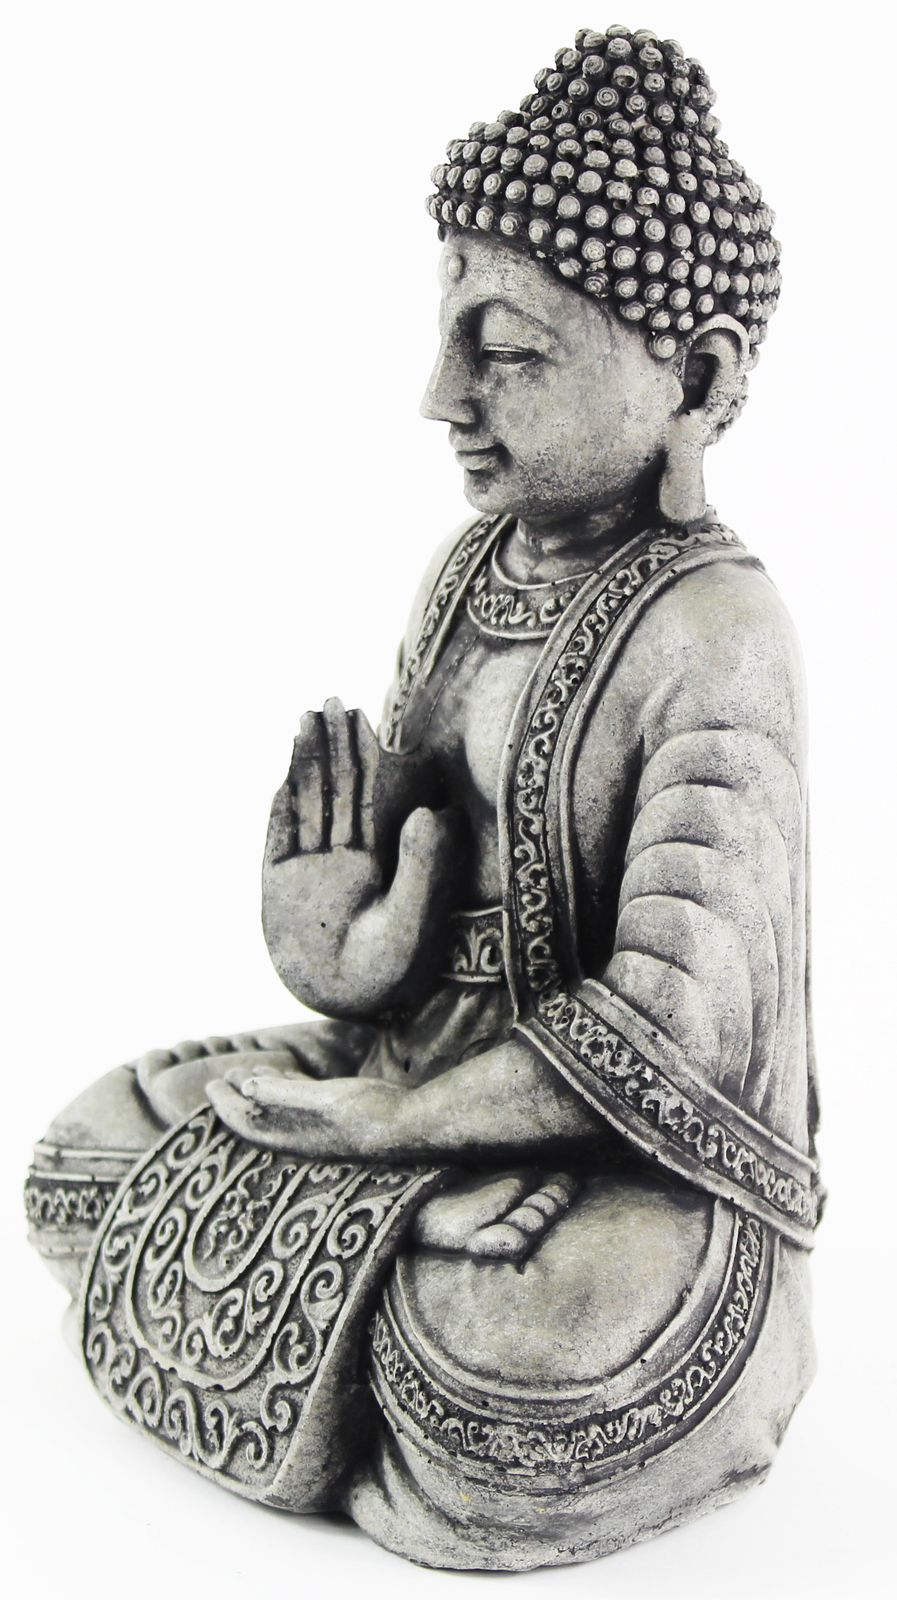 Meditating Sitting Cement Buddha Concrete Statue - $64.00